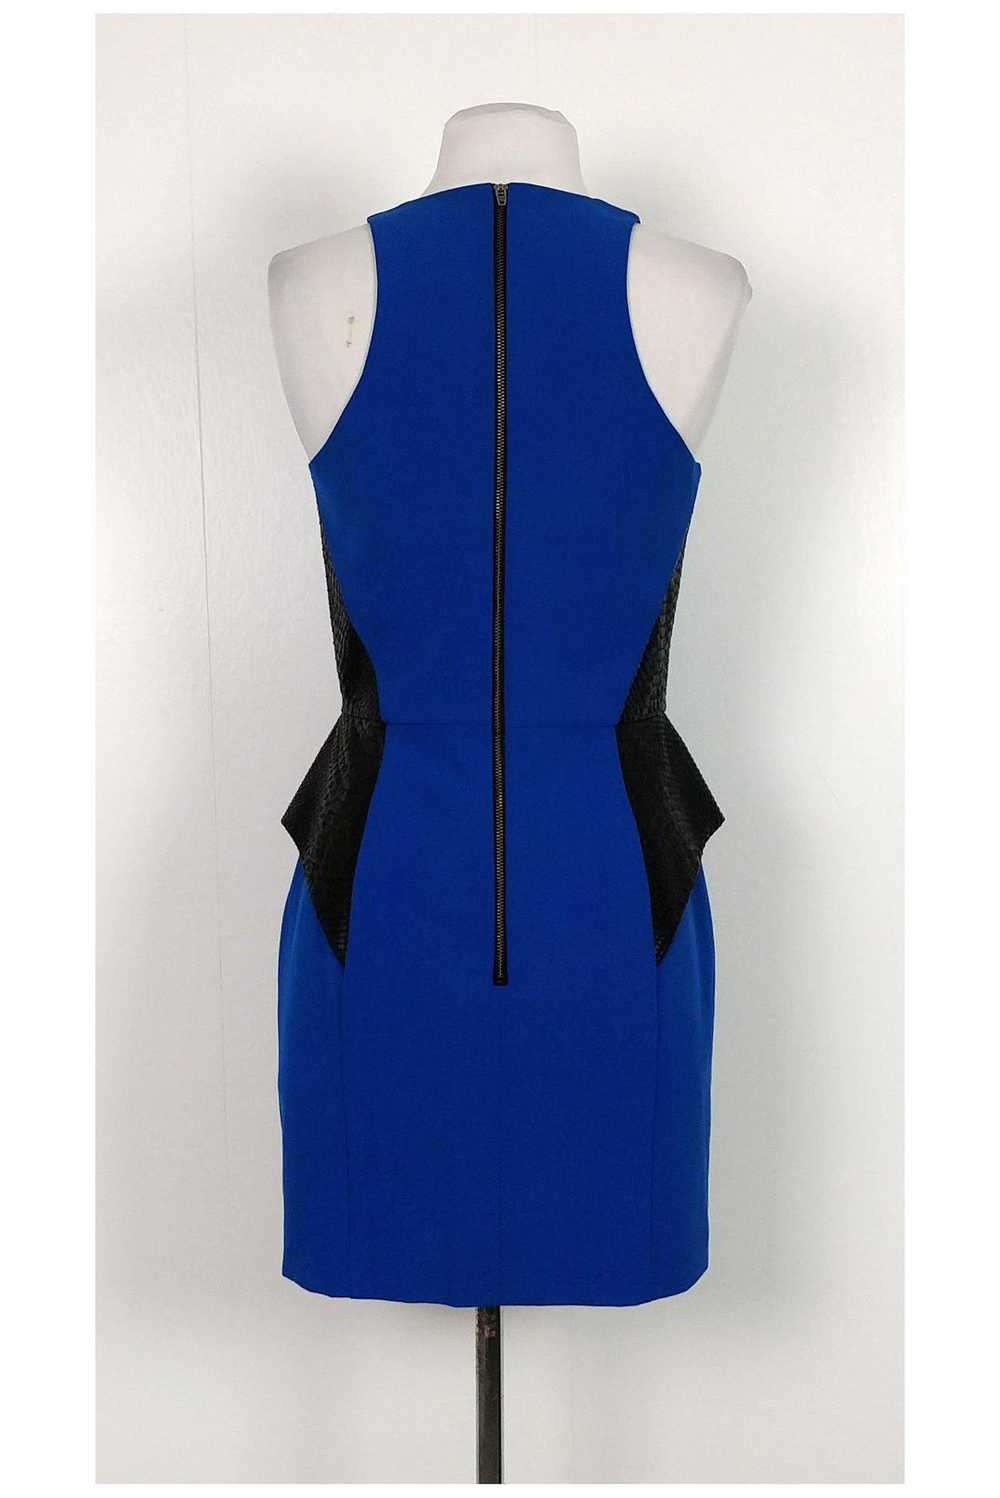 Mason - Royal Blue & Leather Peplum Dress Sz 4 - image 3